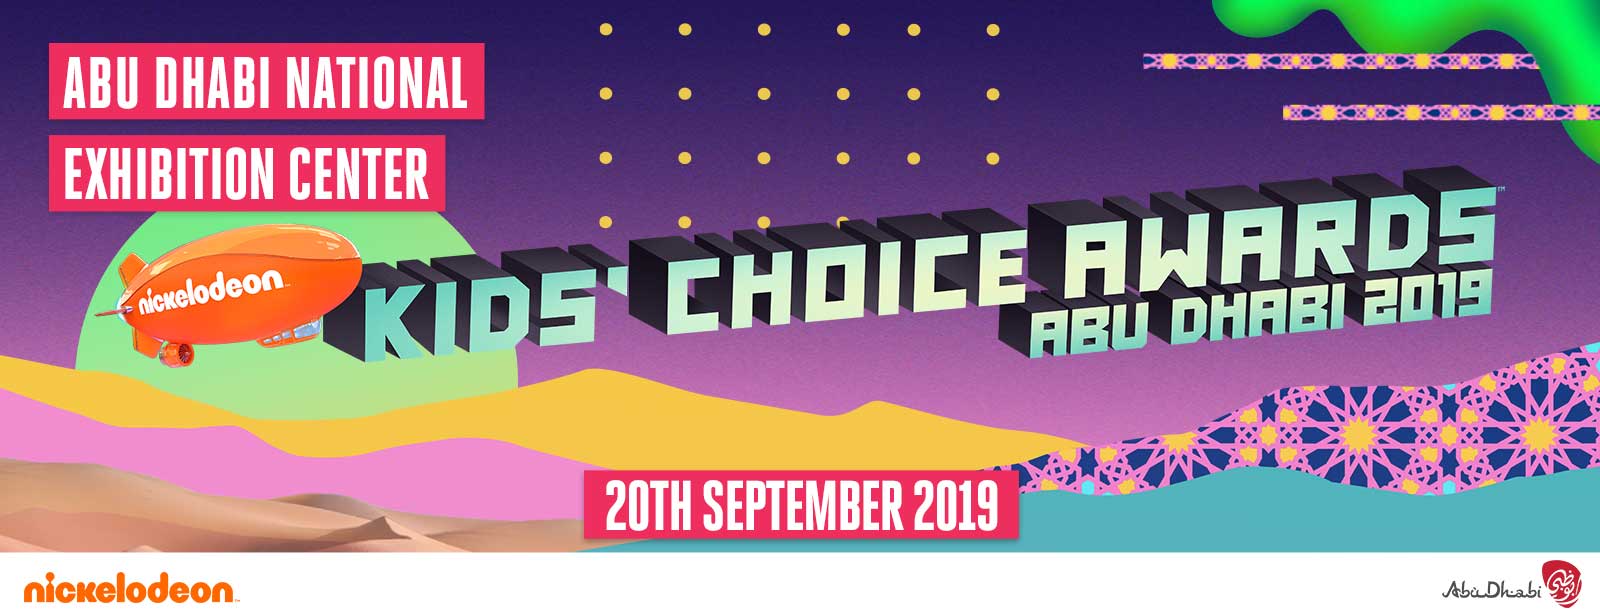 Abu Dhabi Family Week 2019: Kids’ Choice Awards - Coming Soon in UAE